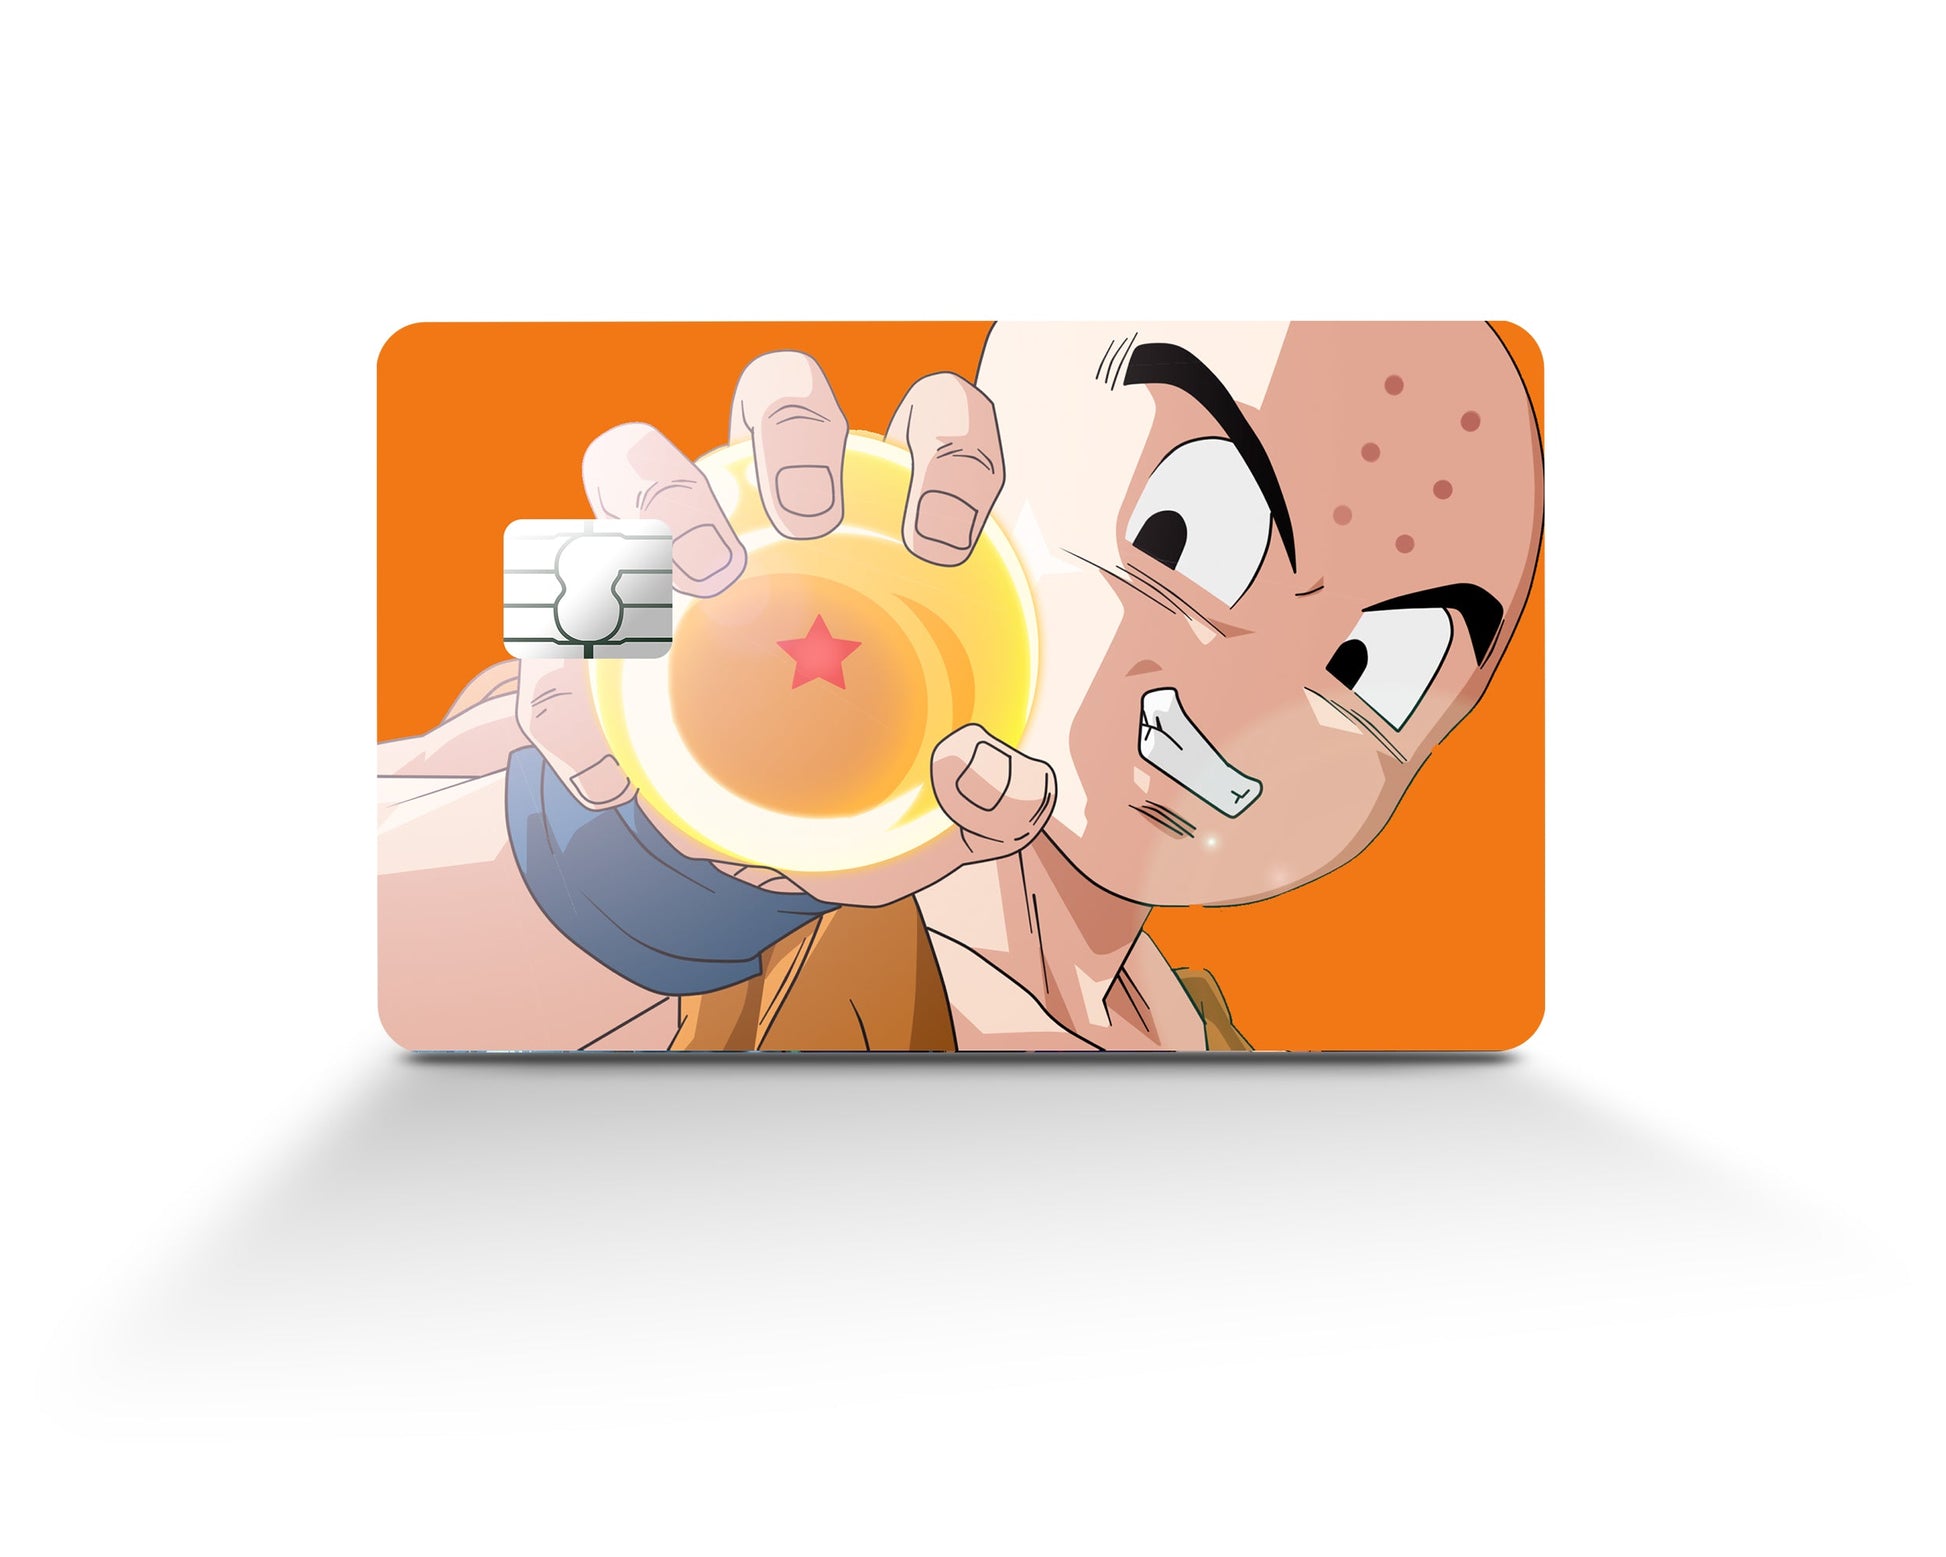 Anime Town Creations Credit Card Dragon Ball Krillin Full Skins - Anime Dragon Ball Credit Card Skin